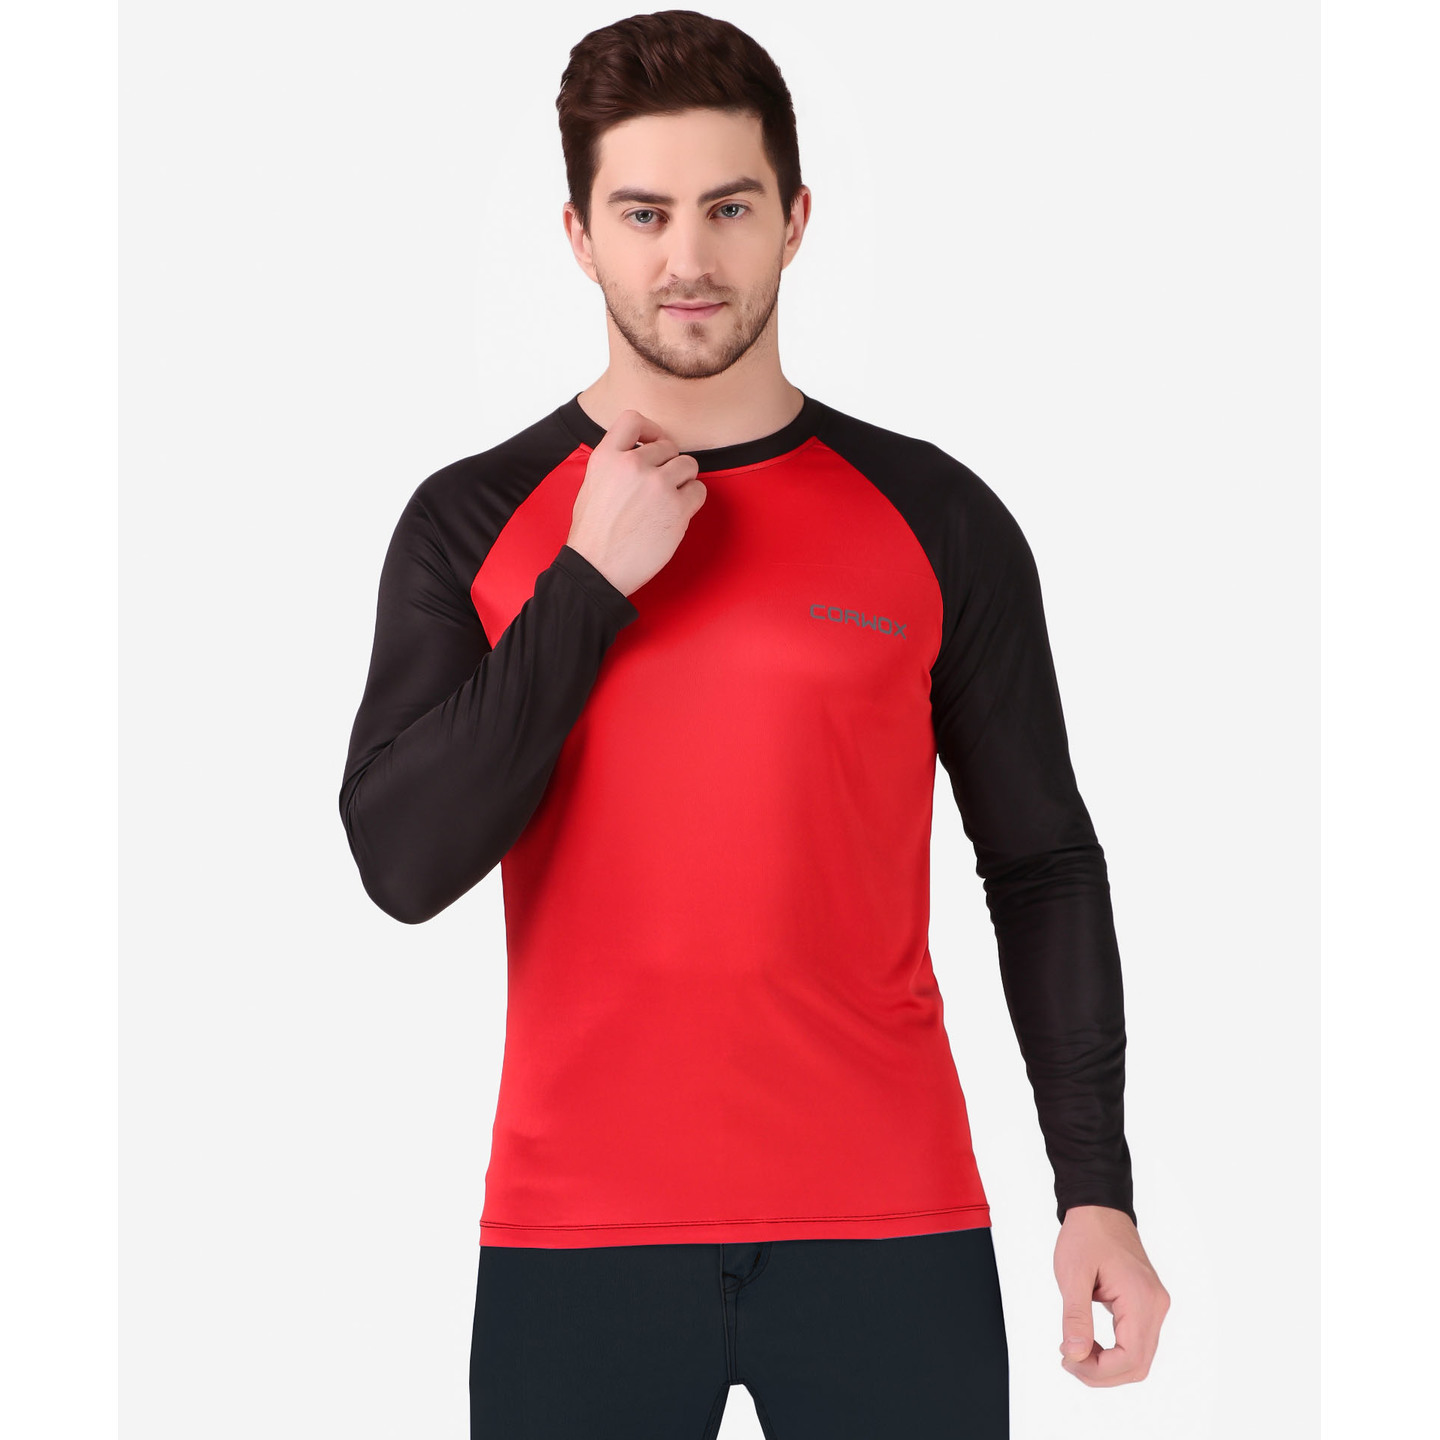 CORWOX Mens Red & Black Full Sleeves T-Shirt